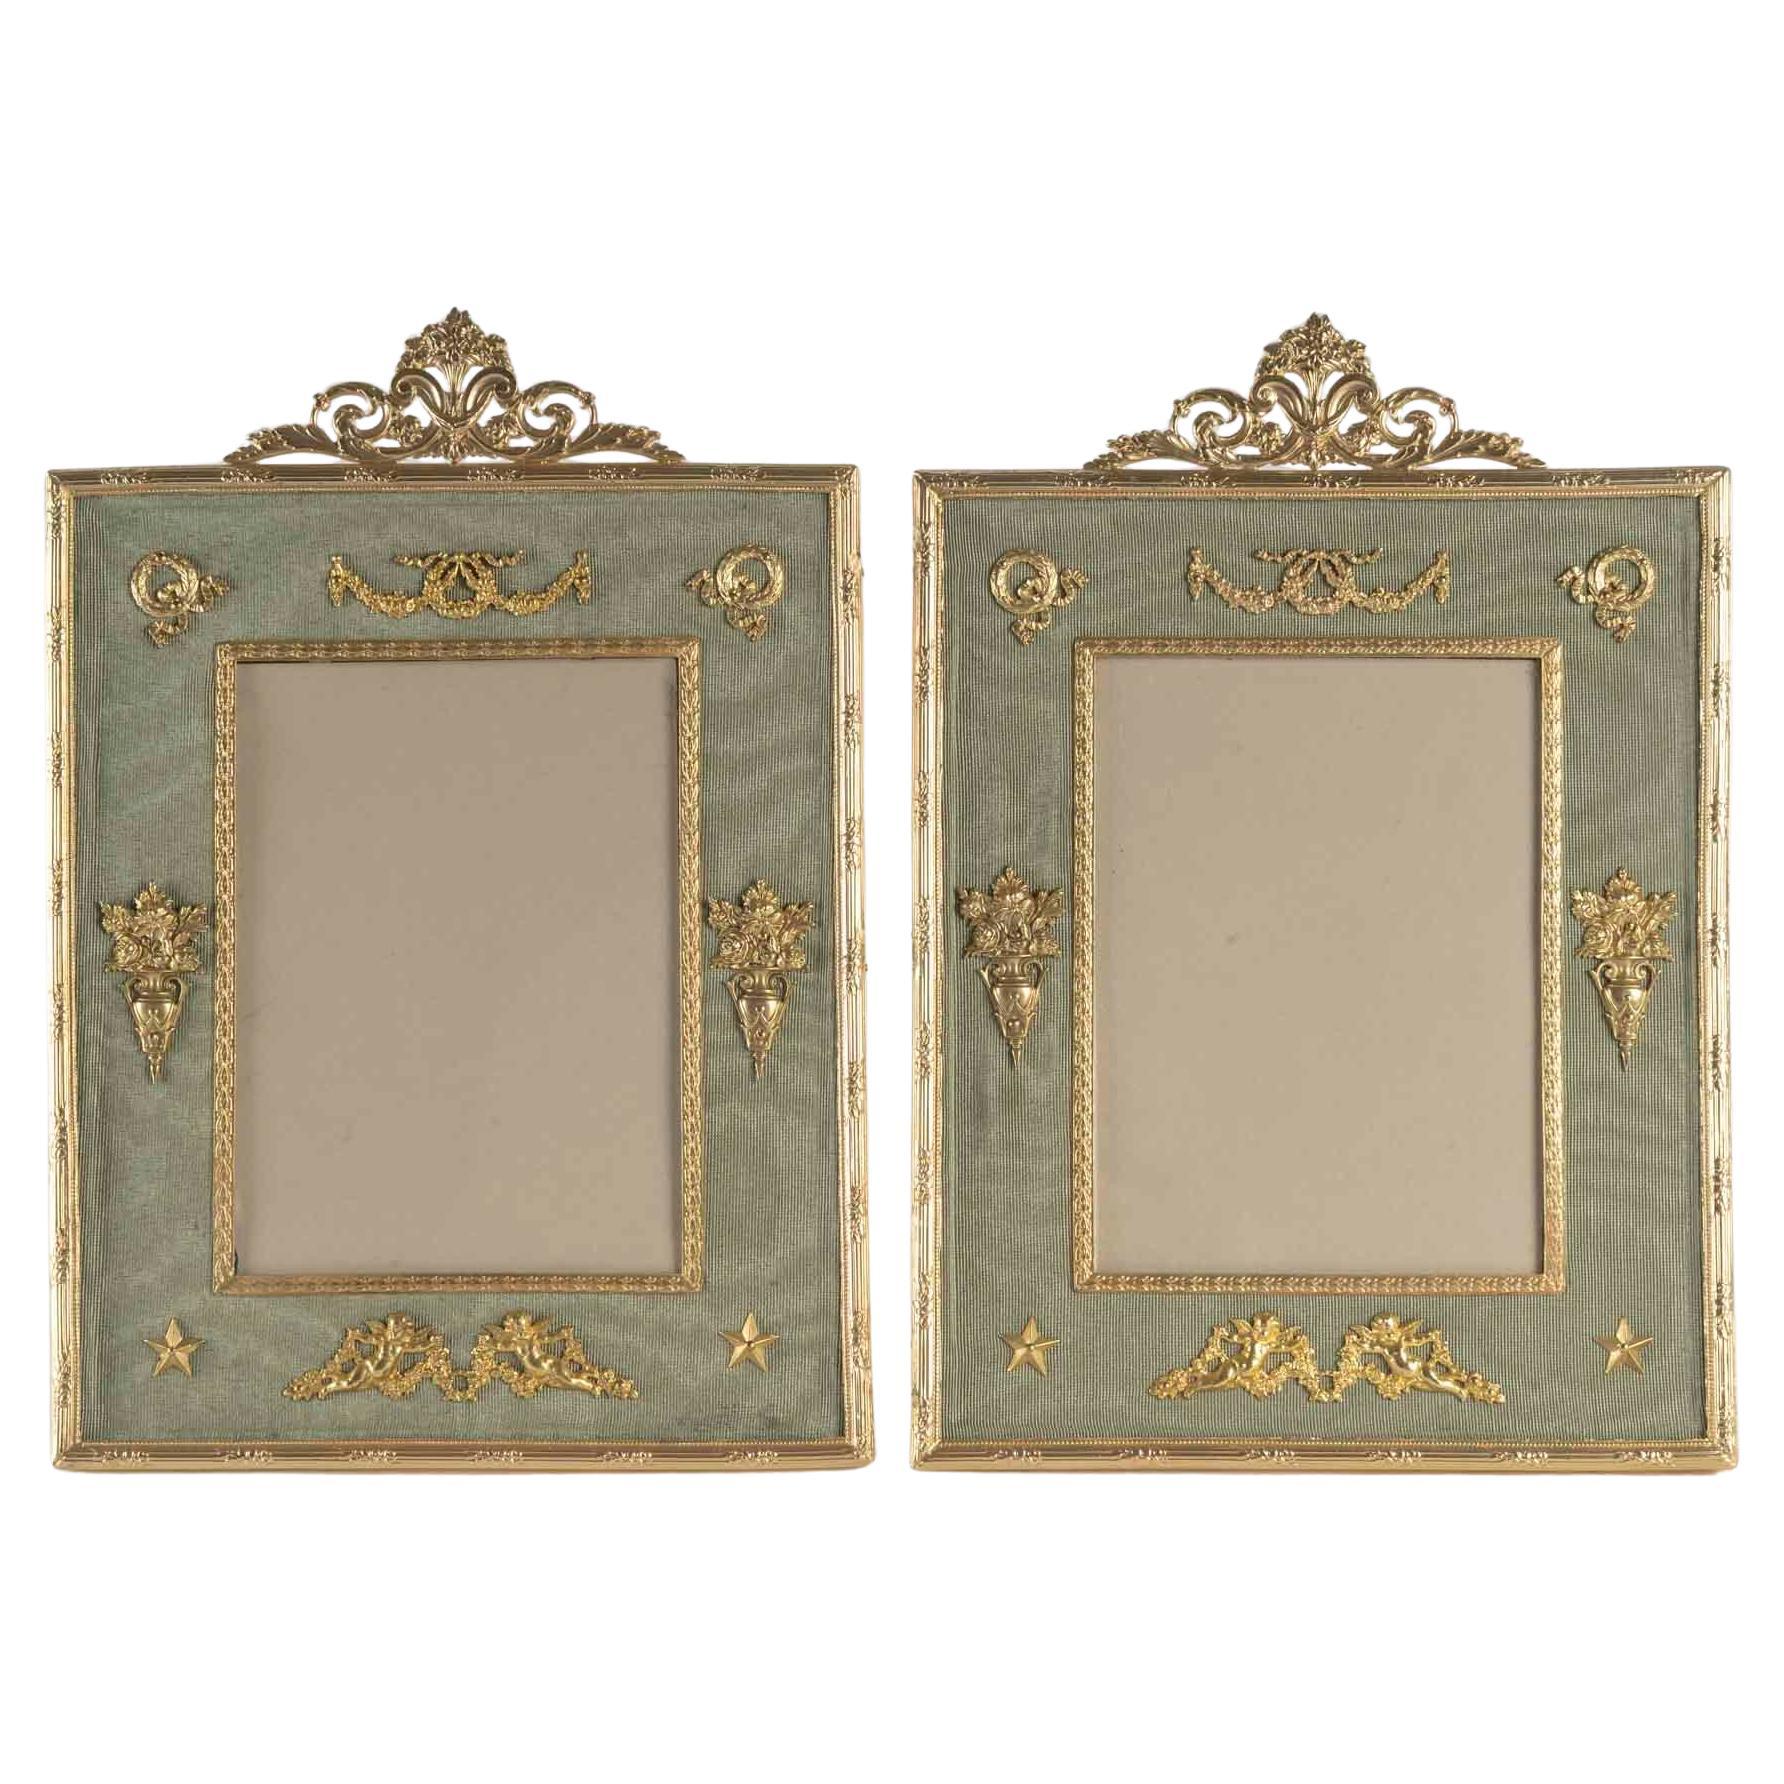 Pair of Gilt Bronze and Fabric Photo Frames, 19th Century, Napoleon III Period.